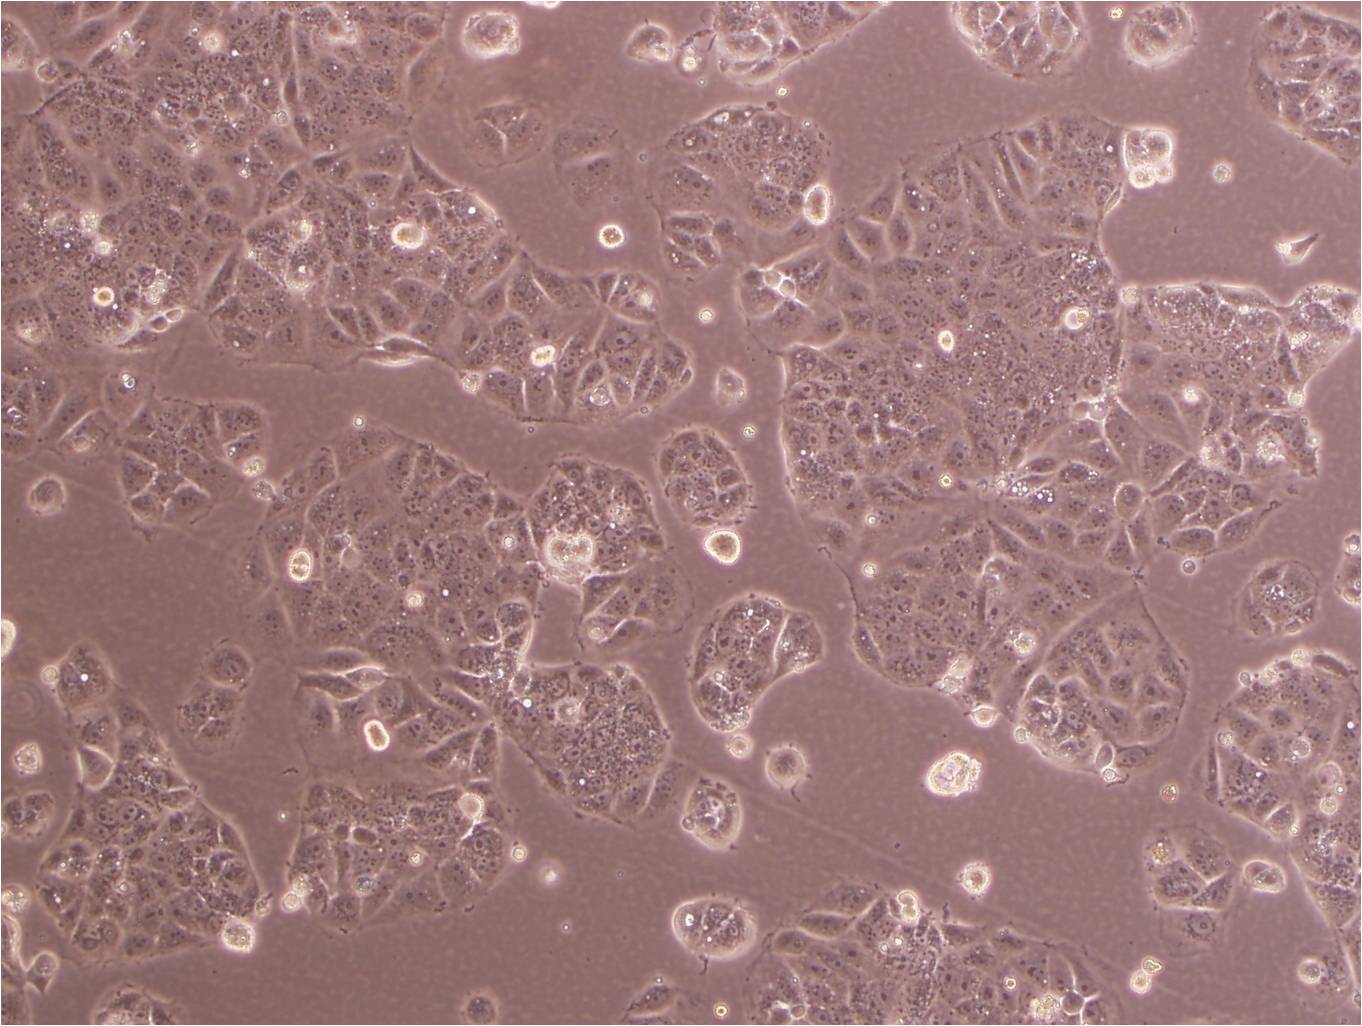 NB4 急性早幼粒细胞系